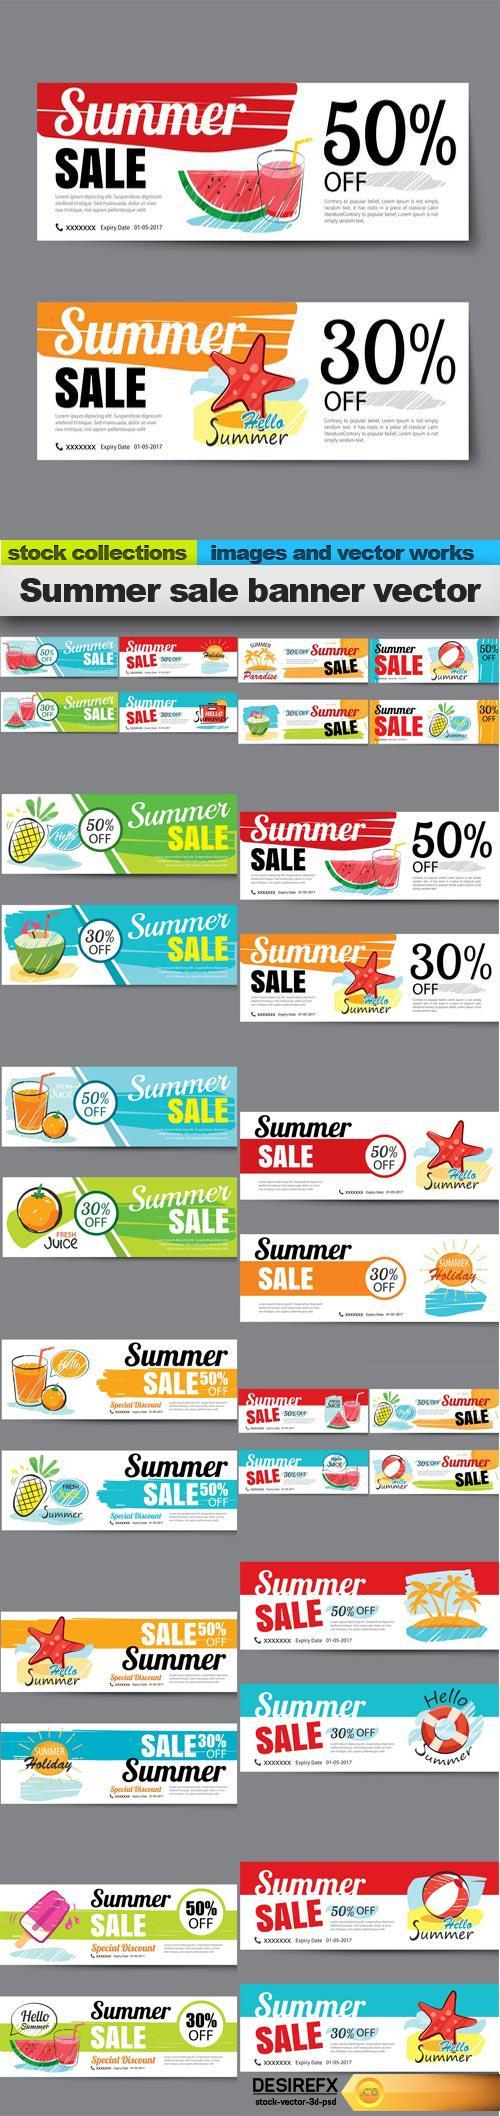 Summer sale banner vector, 15 x EPS